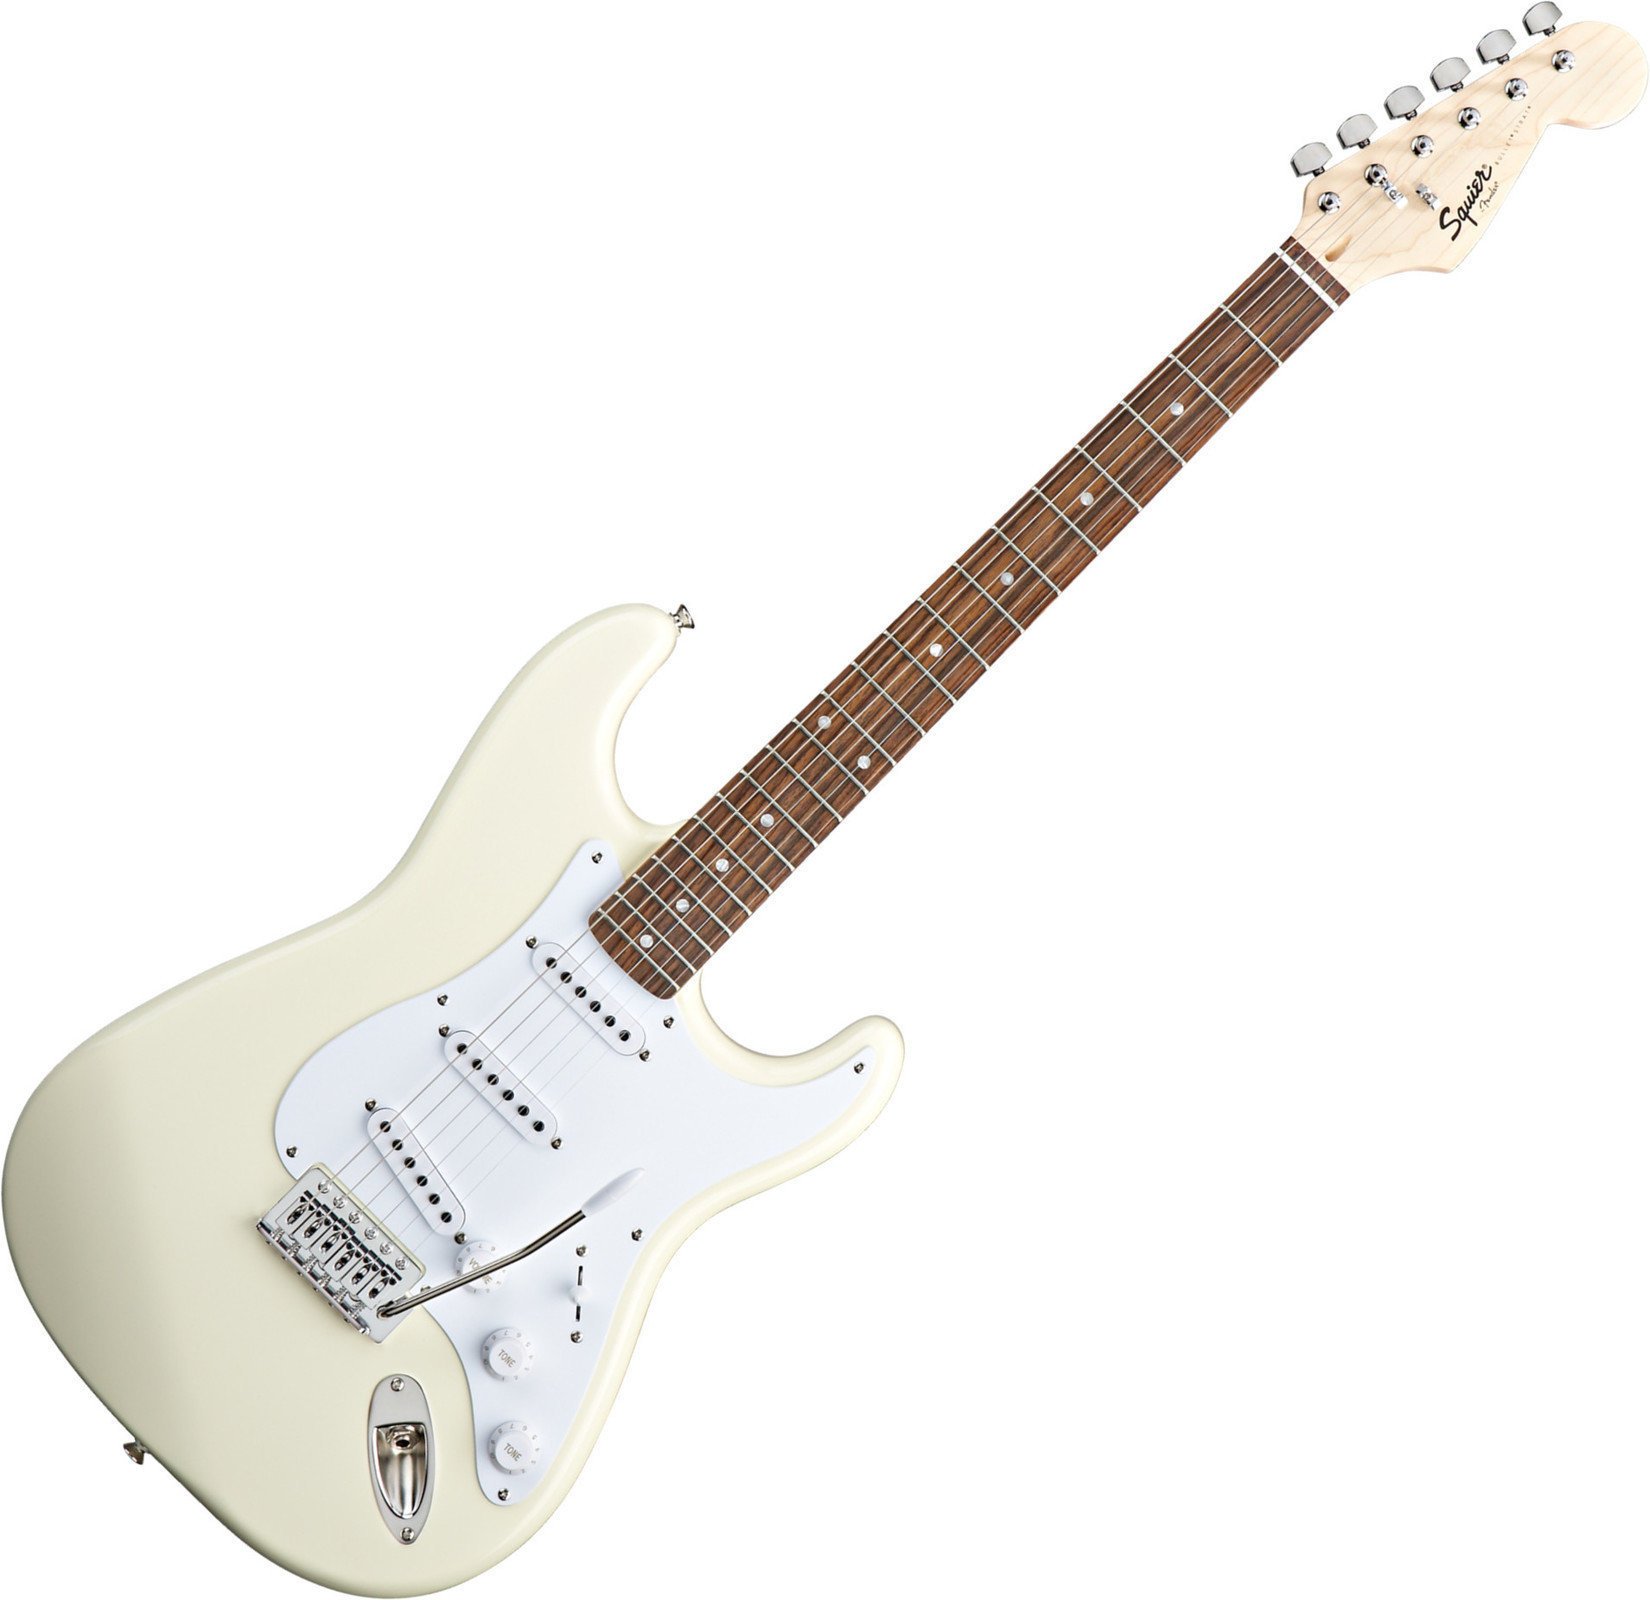 Fender Squier Bullet Stratocaster Tremolo IL Arctic White Fender Squier